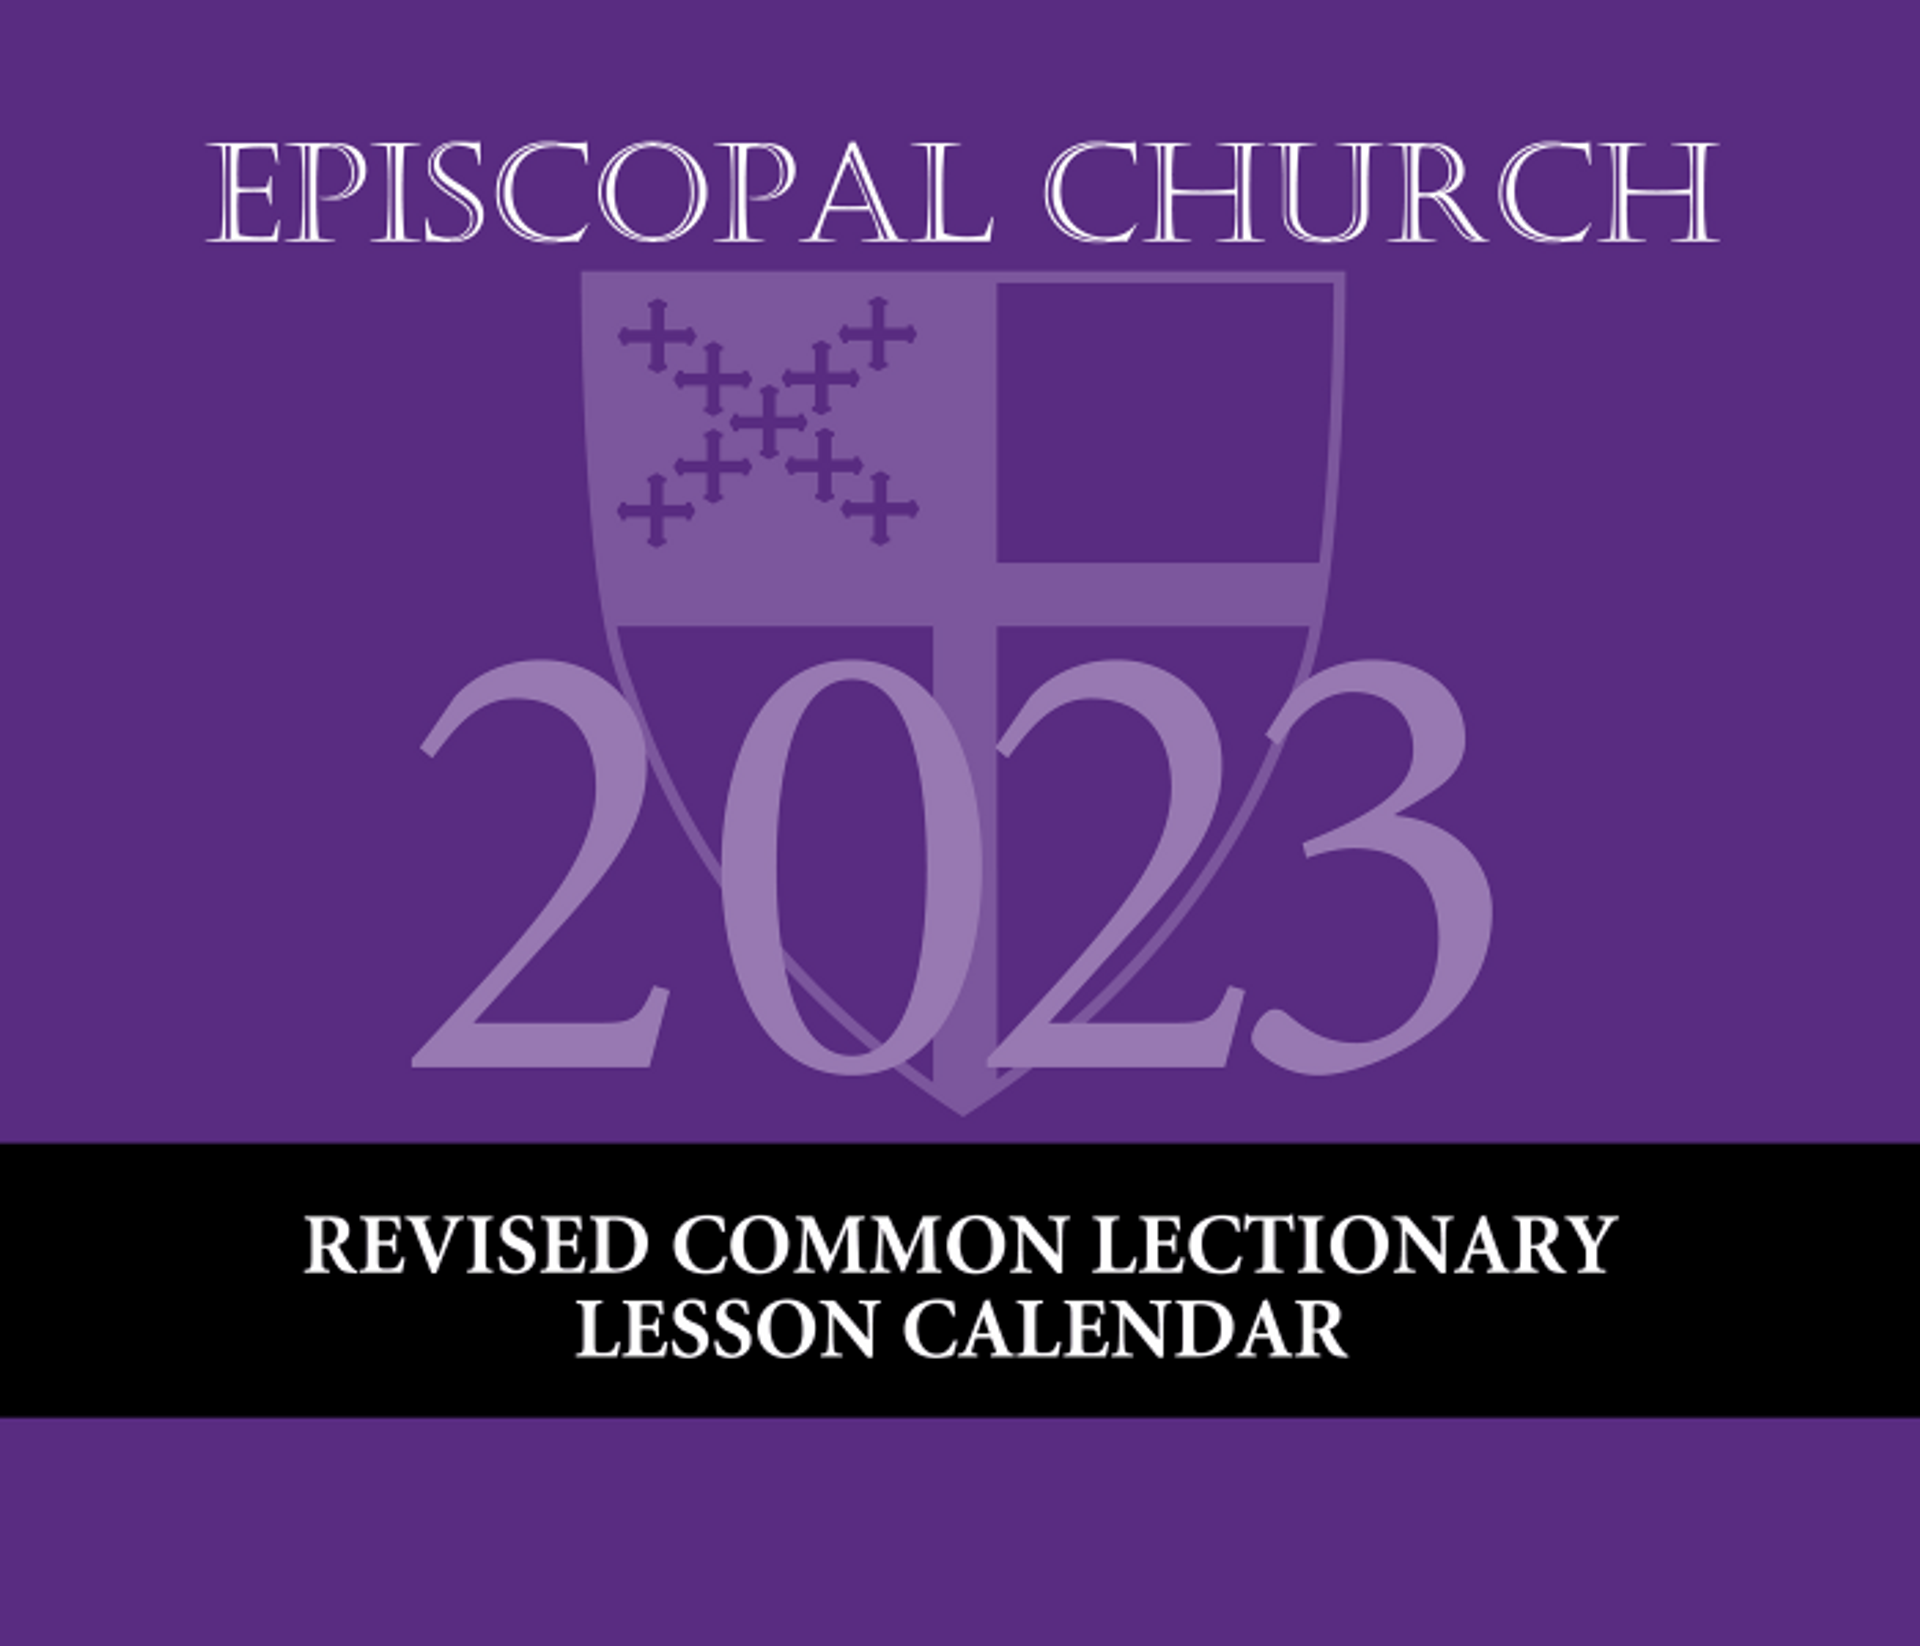 Desk Diary (Calendar) with Lectionary 2023 Episcopal Shoppe